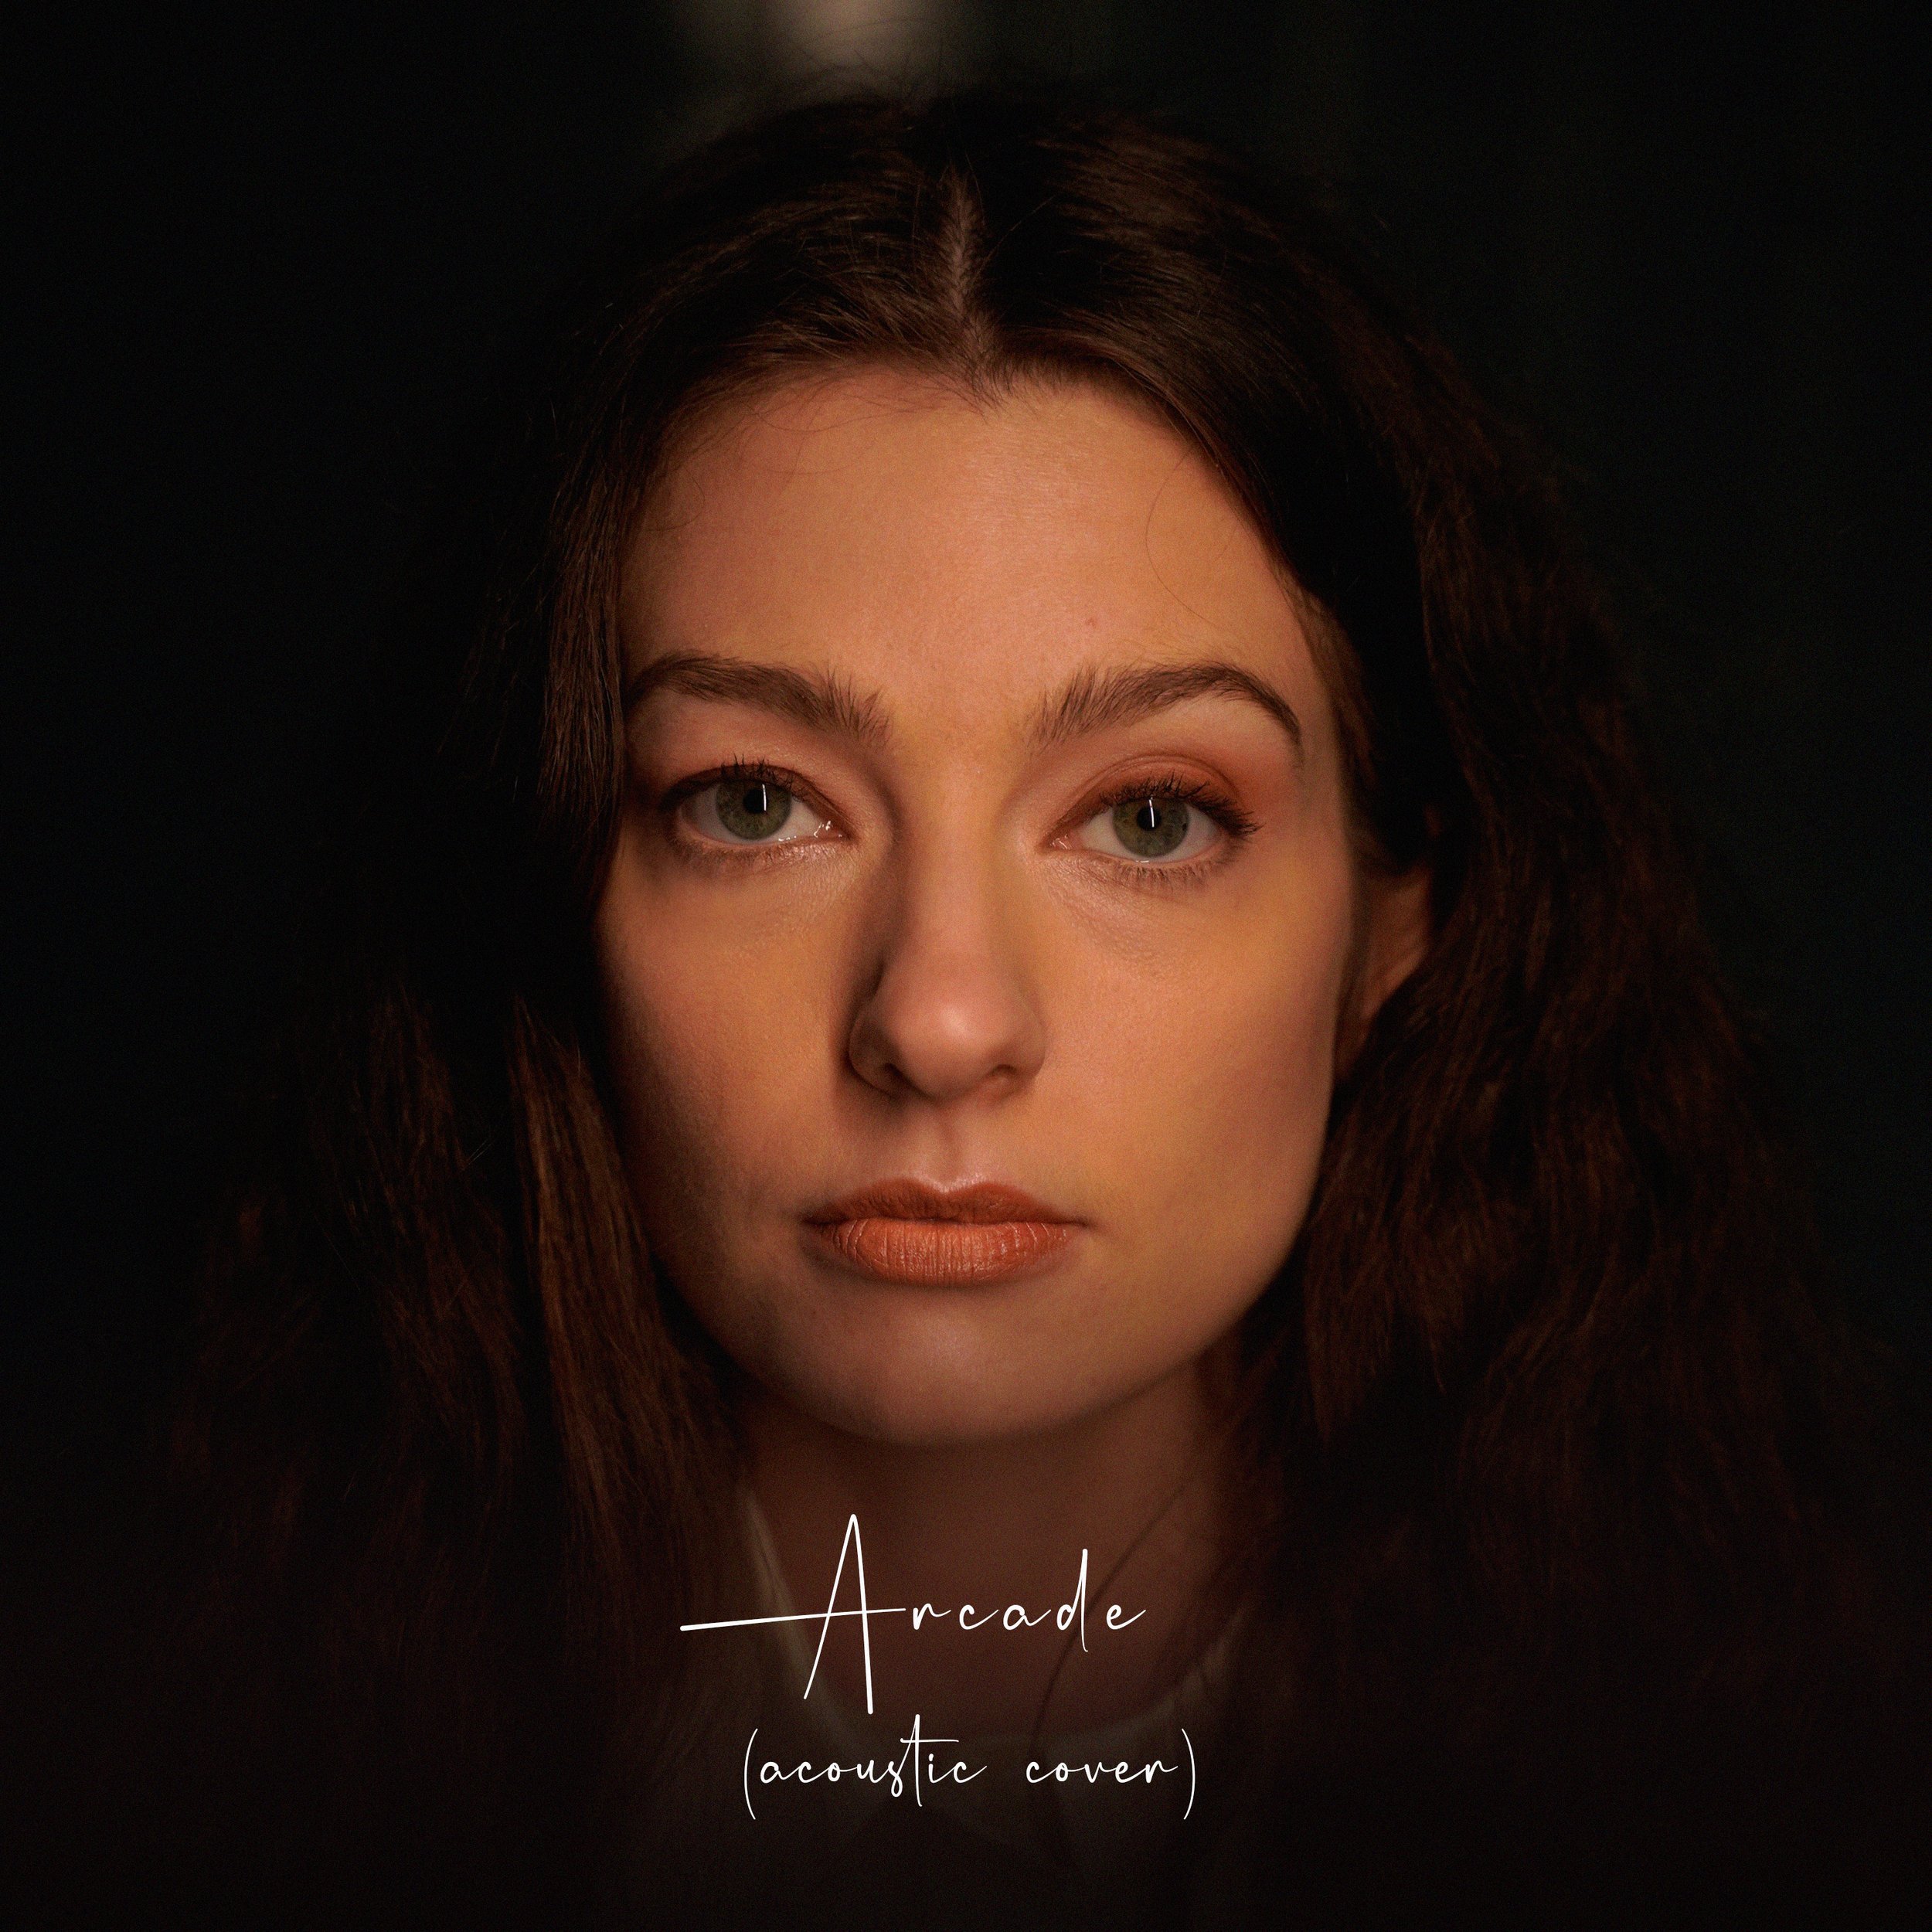 Amanda Tenfjord - Arcade cover version